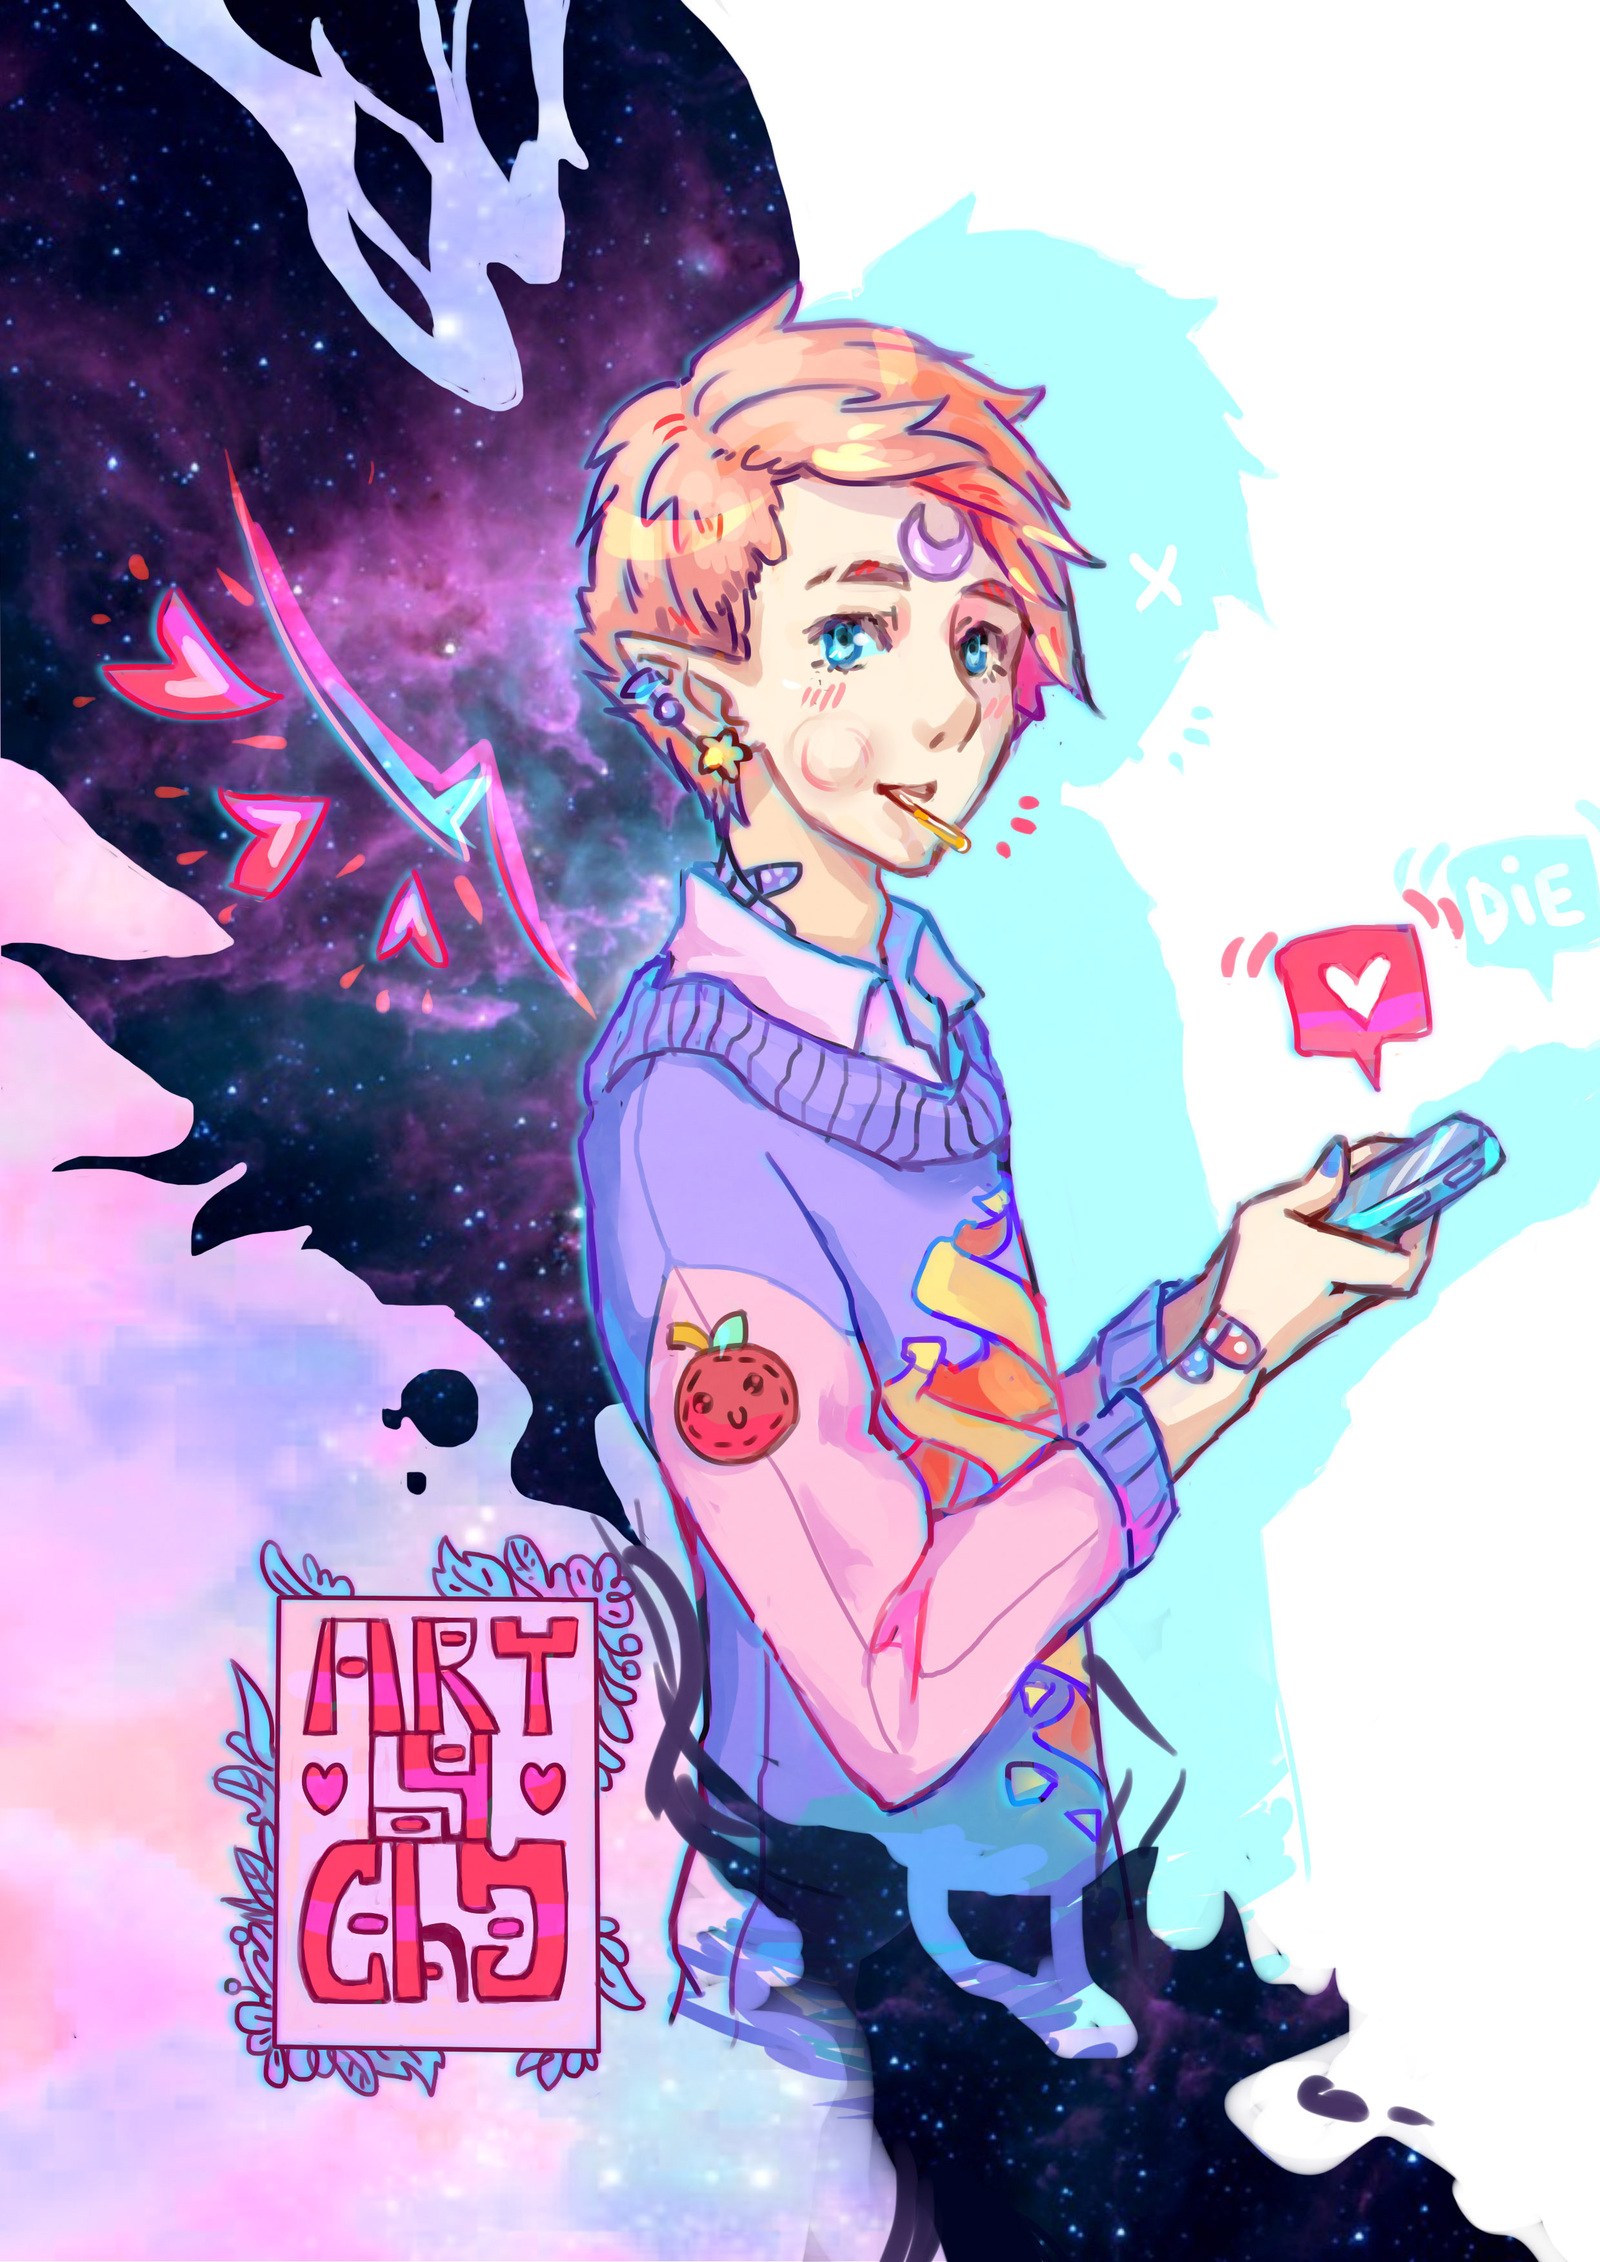 Anime boy - SAI, Boy, 2D, Photoshop, Digital, Anime art, My